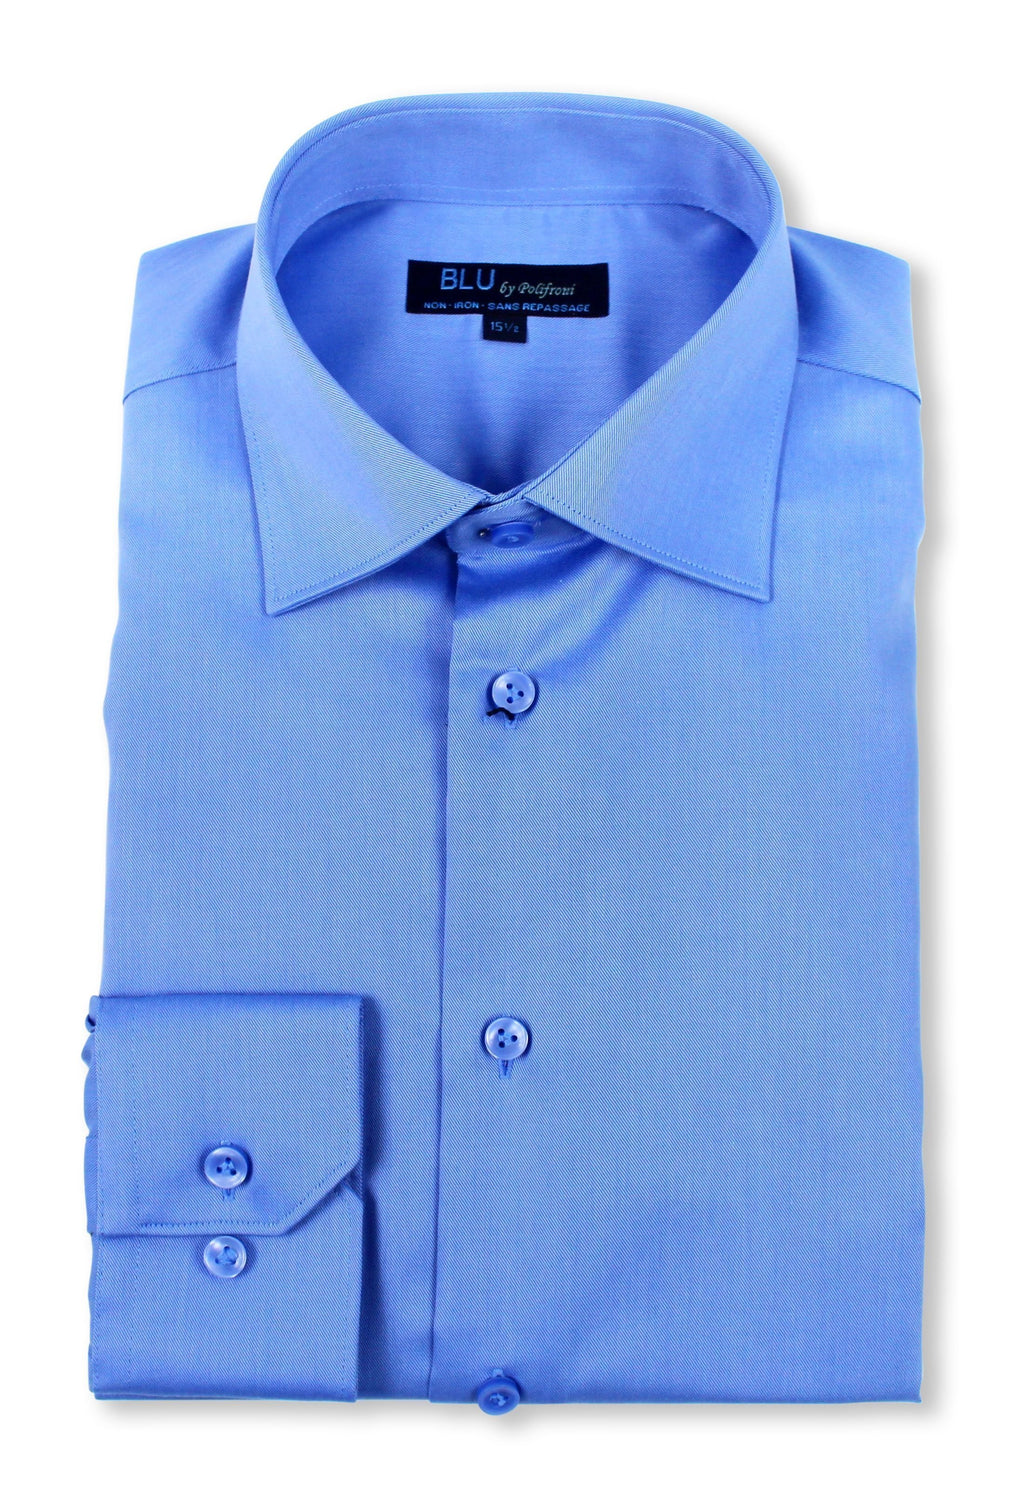 Blu by Polifroni Poplin Slim Fit Non-Iron Dress Shirt